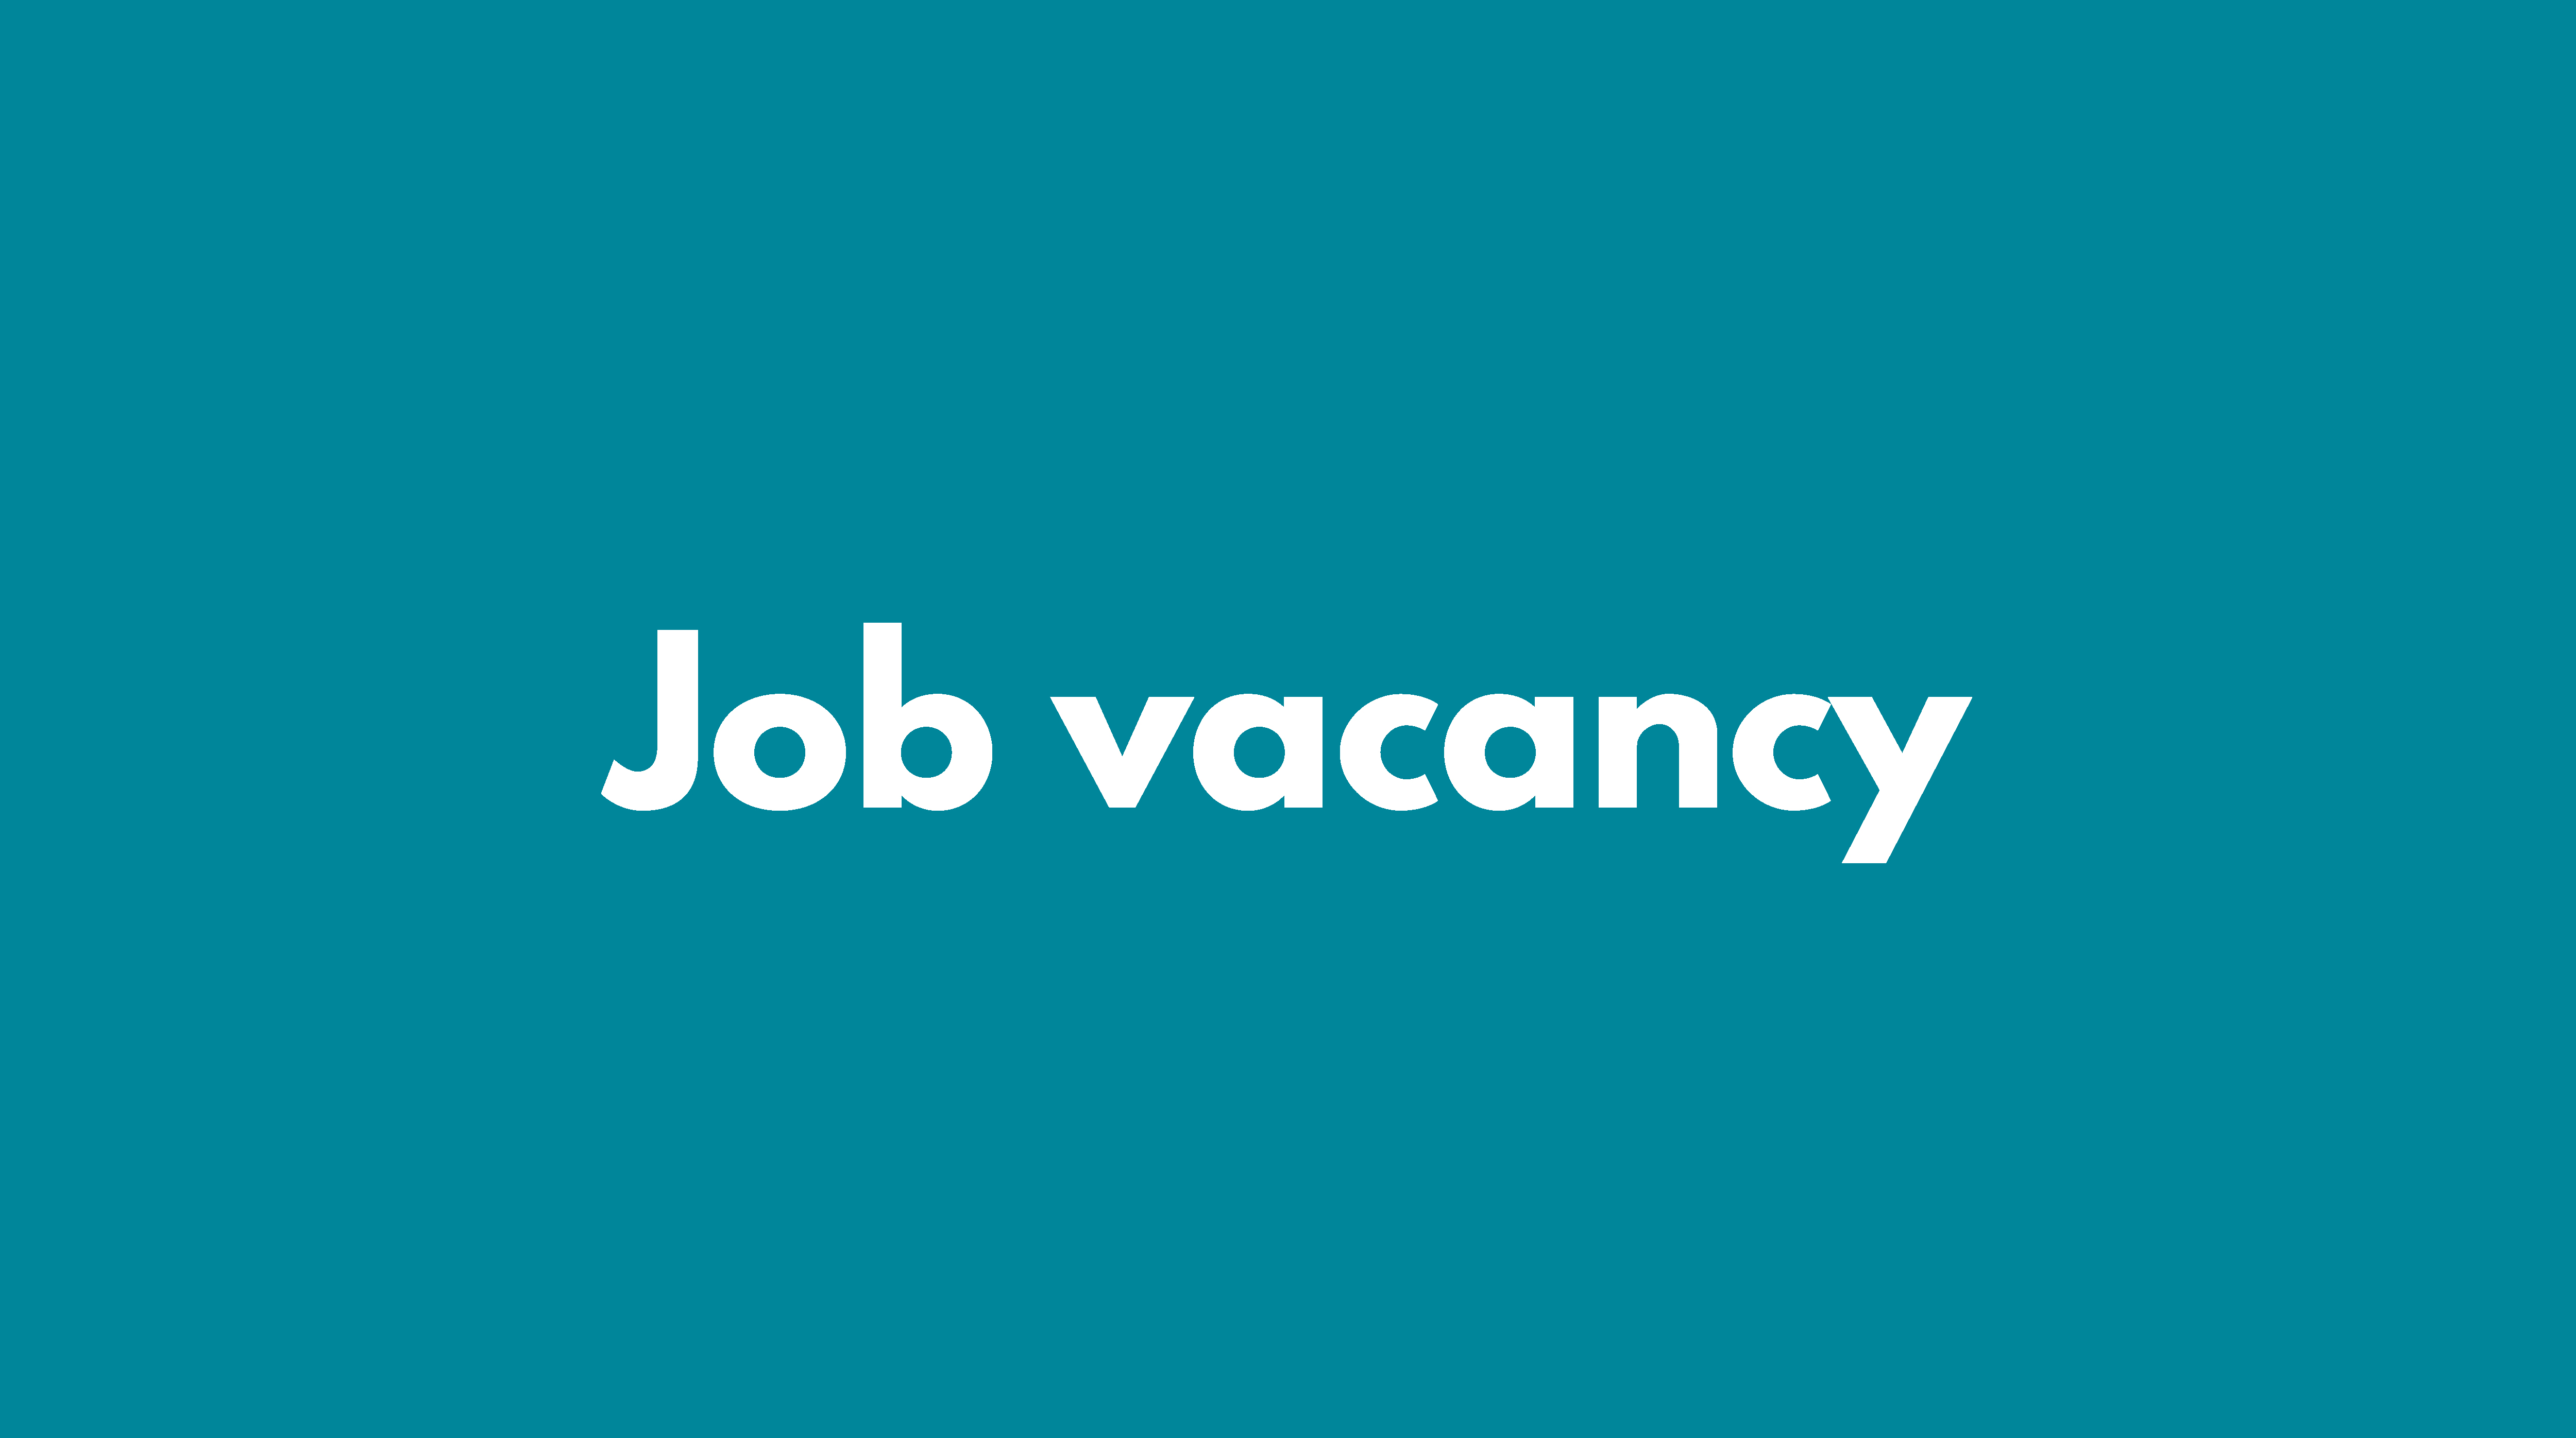 Job vacancy - News